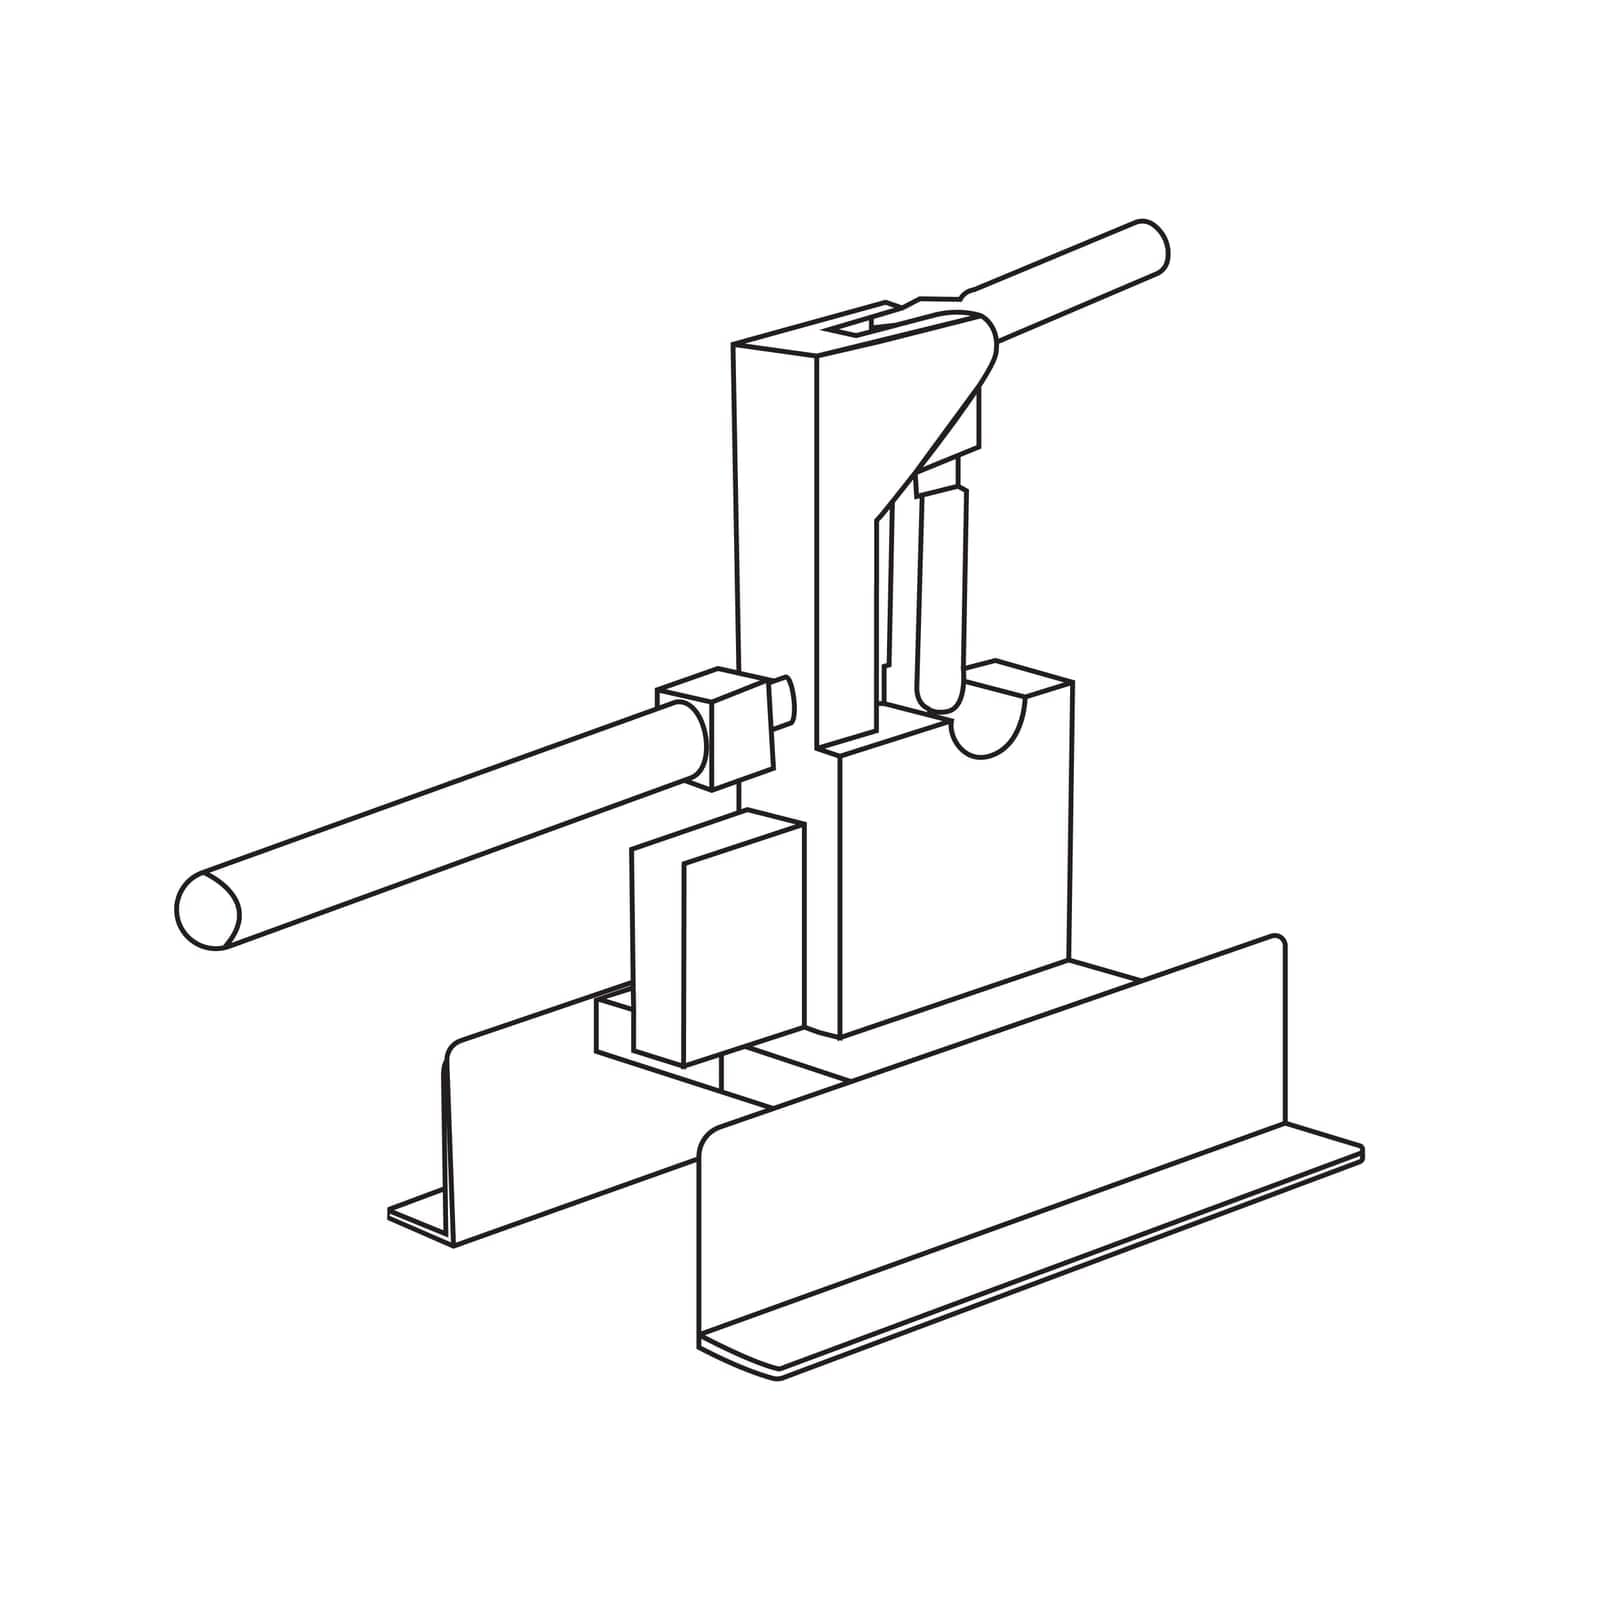 Glass cutting machine icon,vector illustration template design